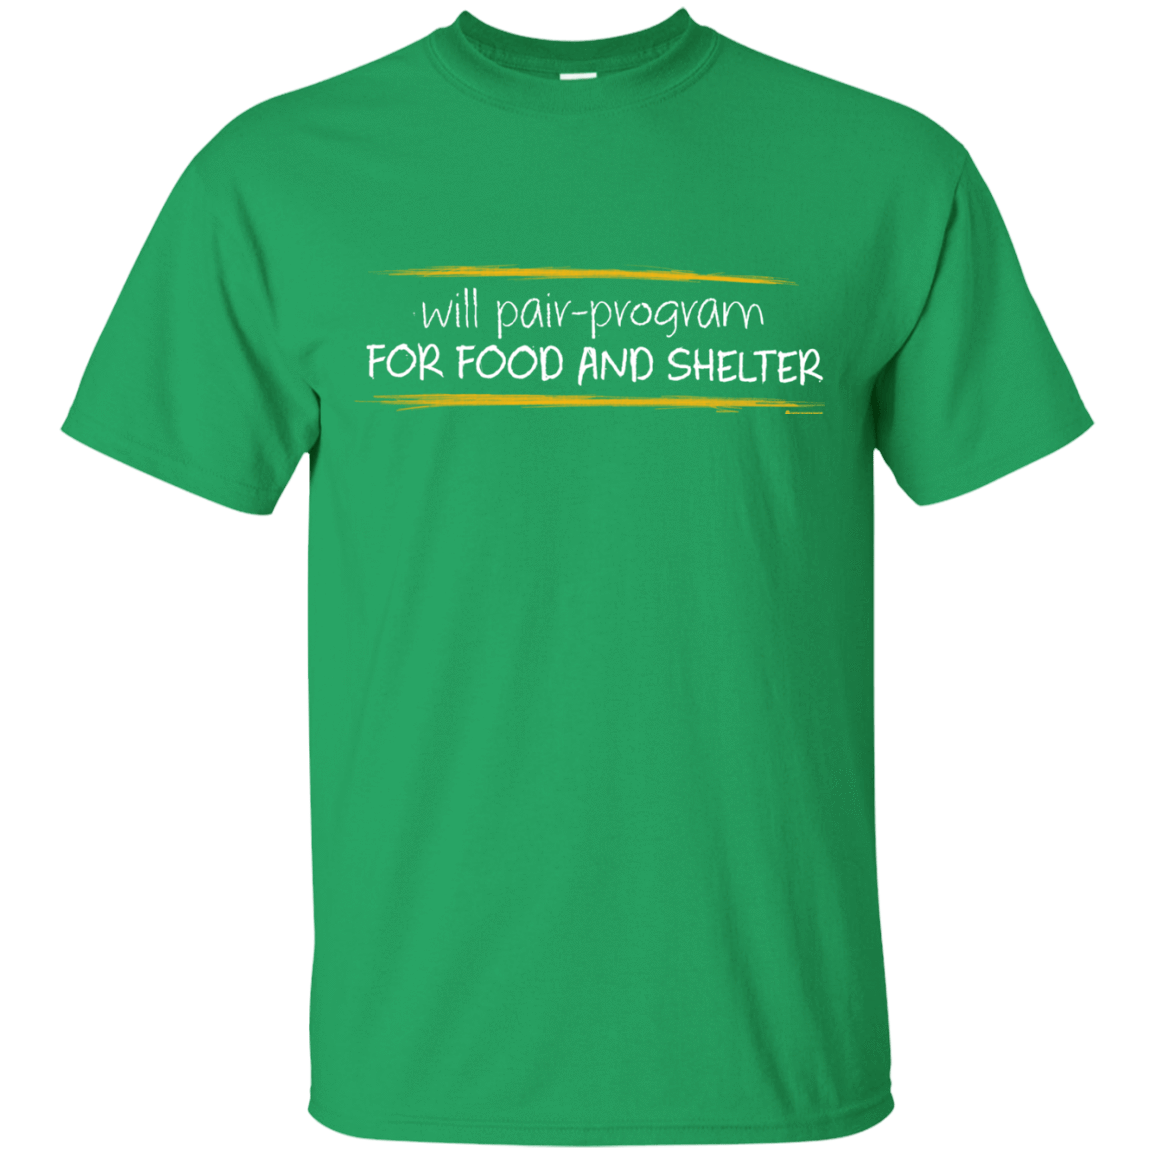 T-Shirts Irish Green / Small Pair Programming For Food And Shelter T-Shirt